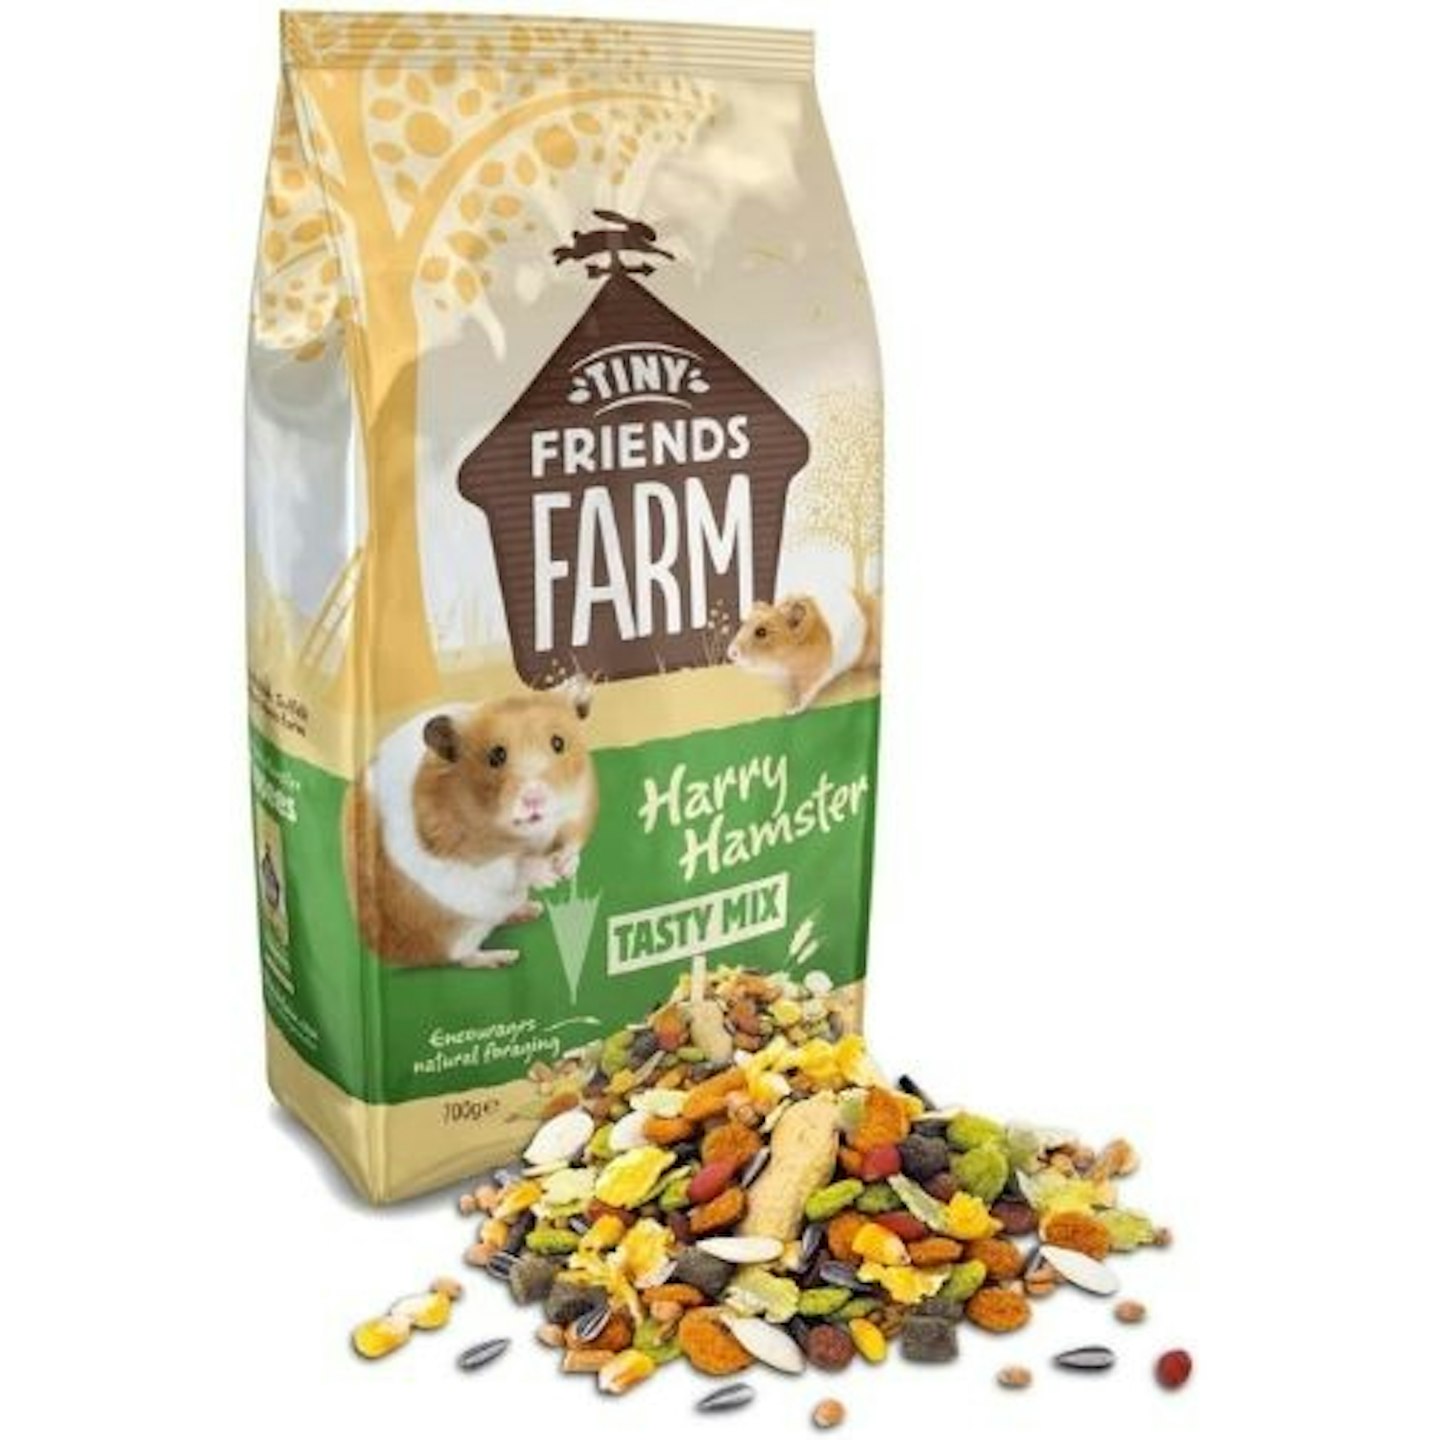 Supreme Tiny Friends Farm Harry Hamster Tasty Mix 6 packs of 700g